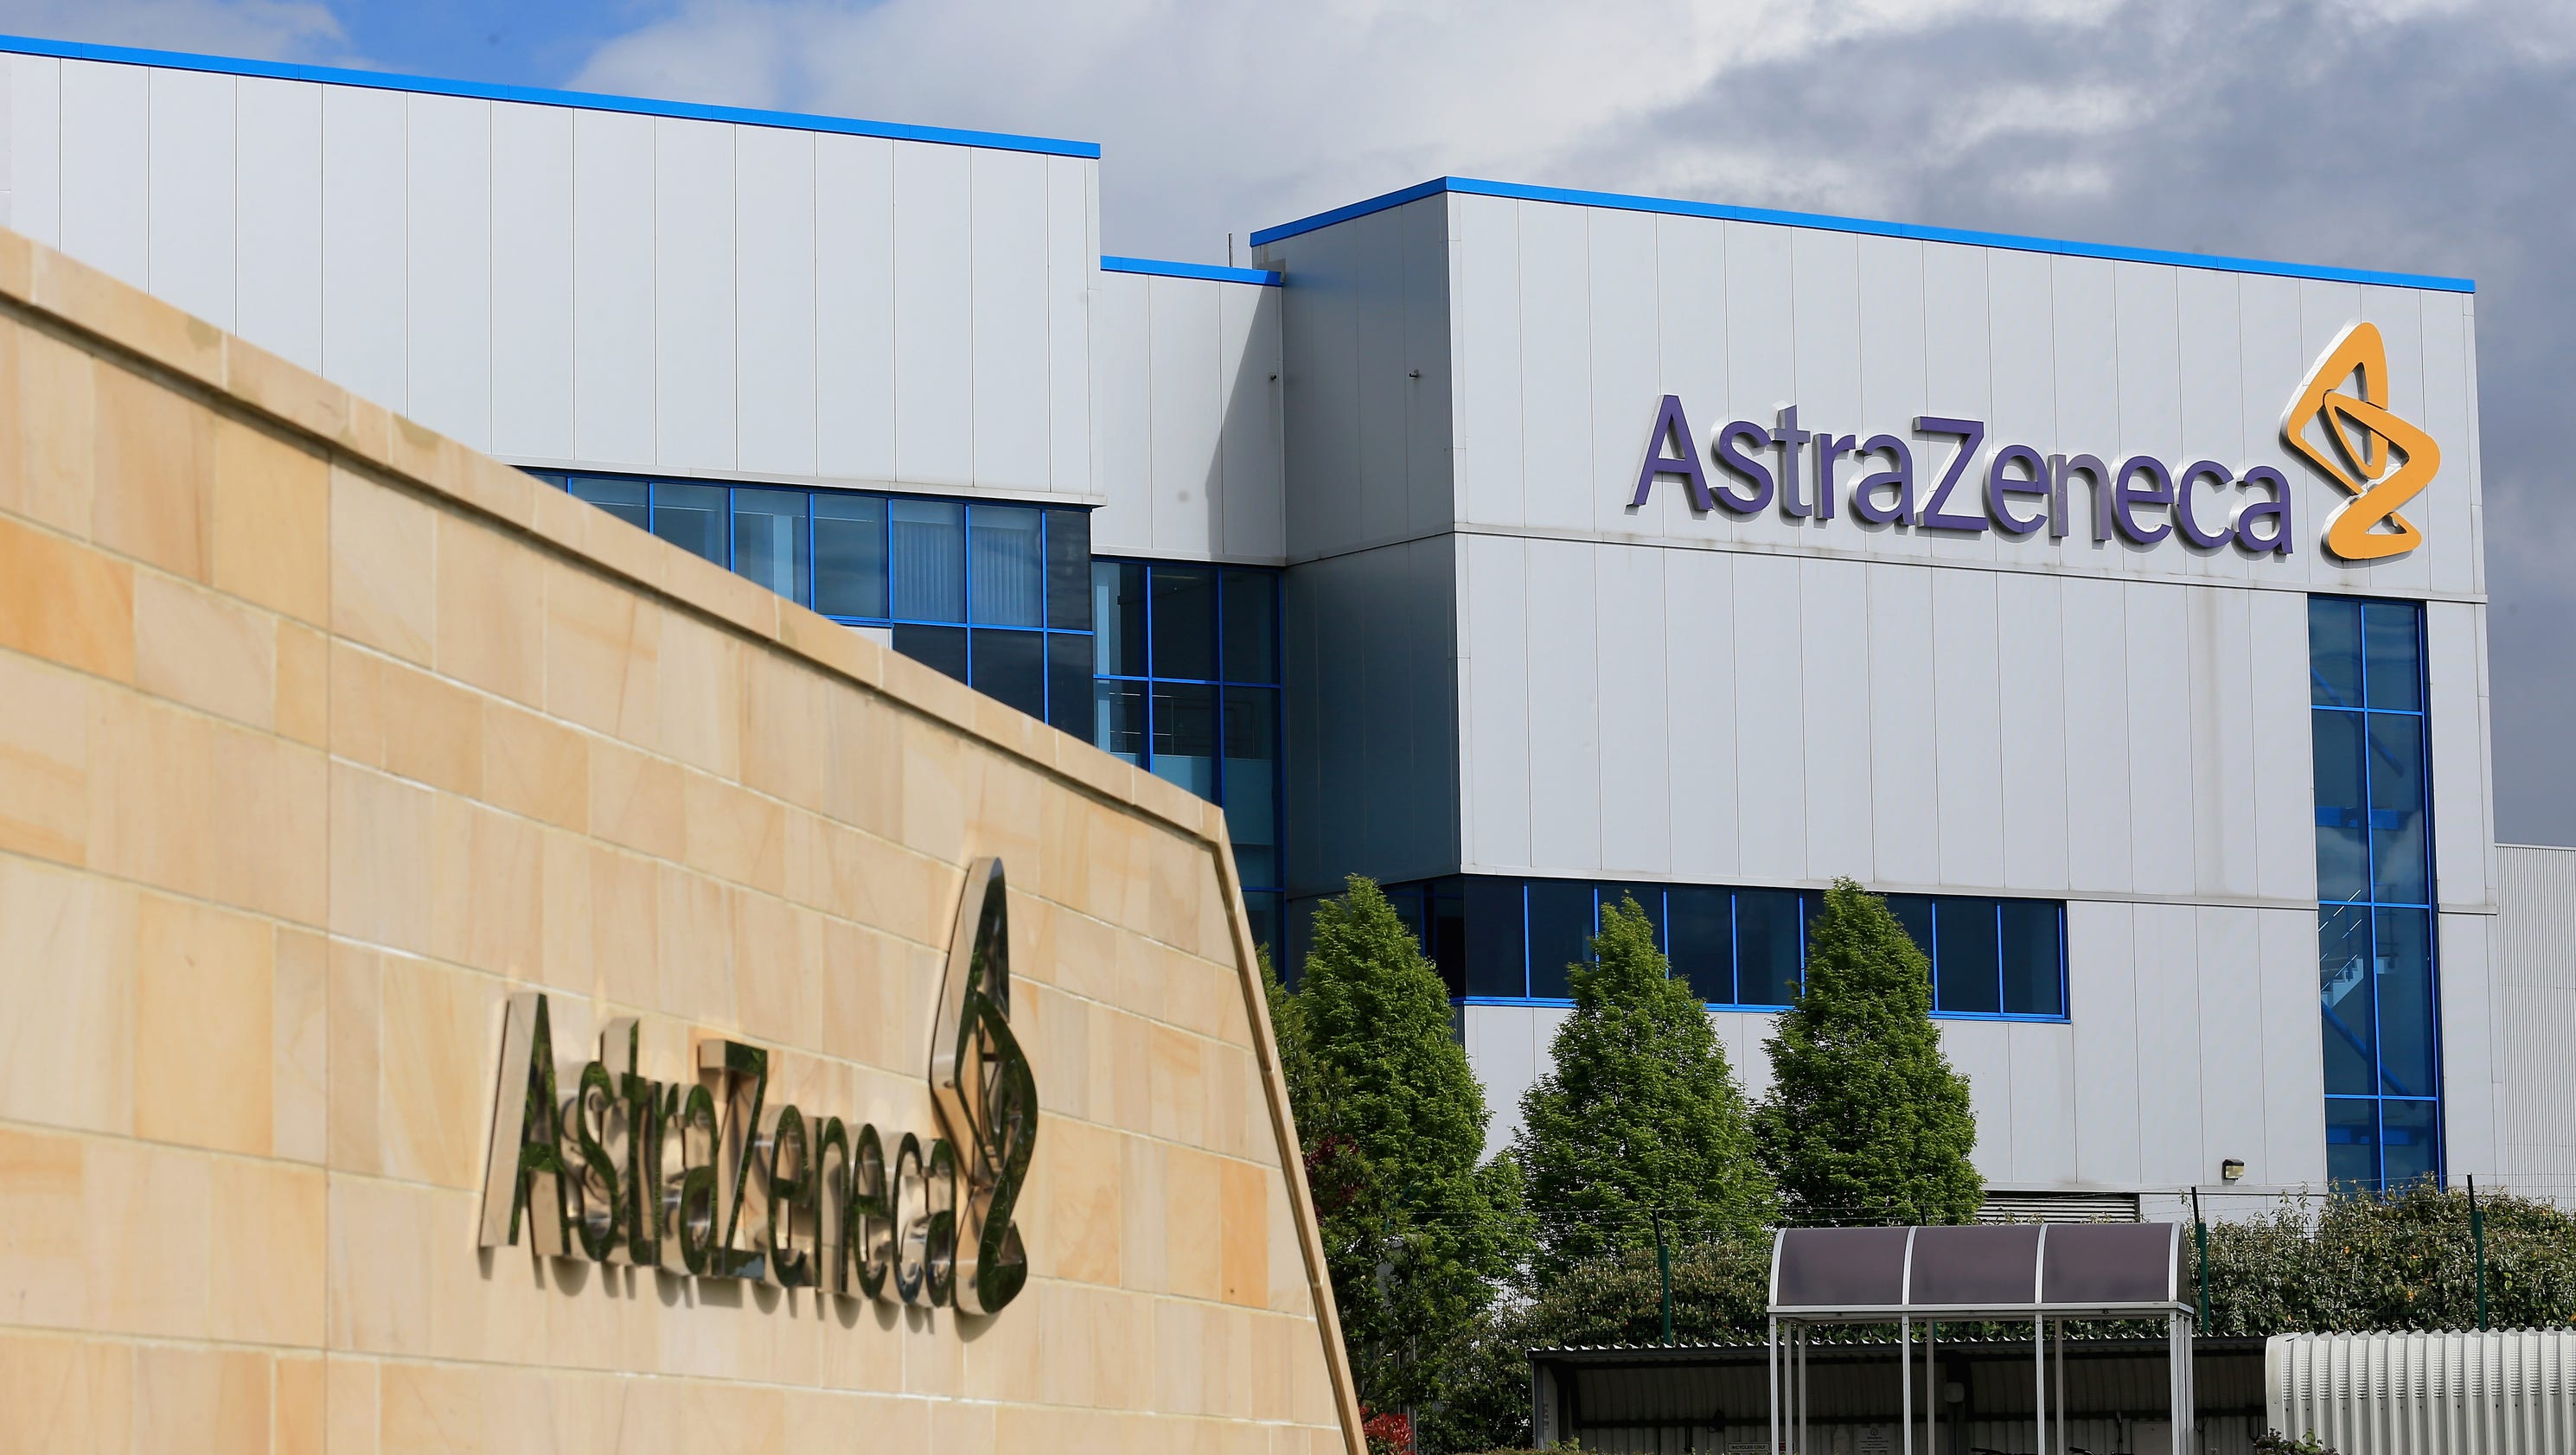 Shares in AstraZeneca dive as key cancer drug trial fails